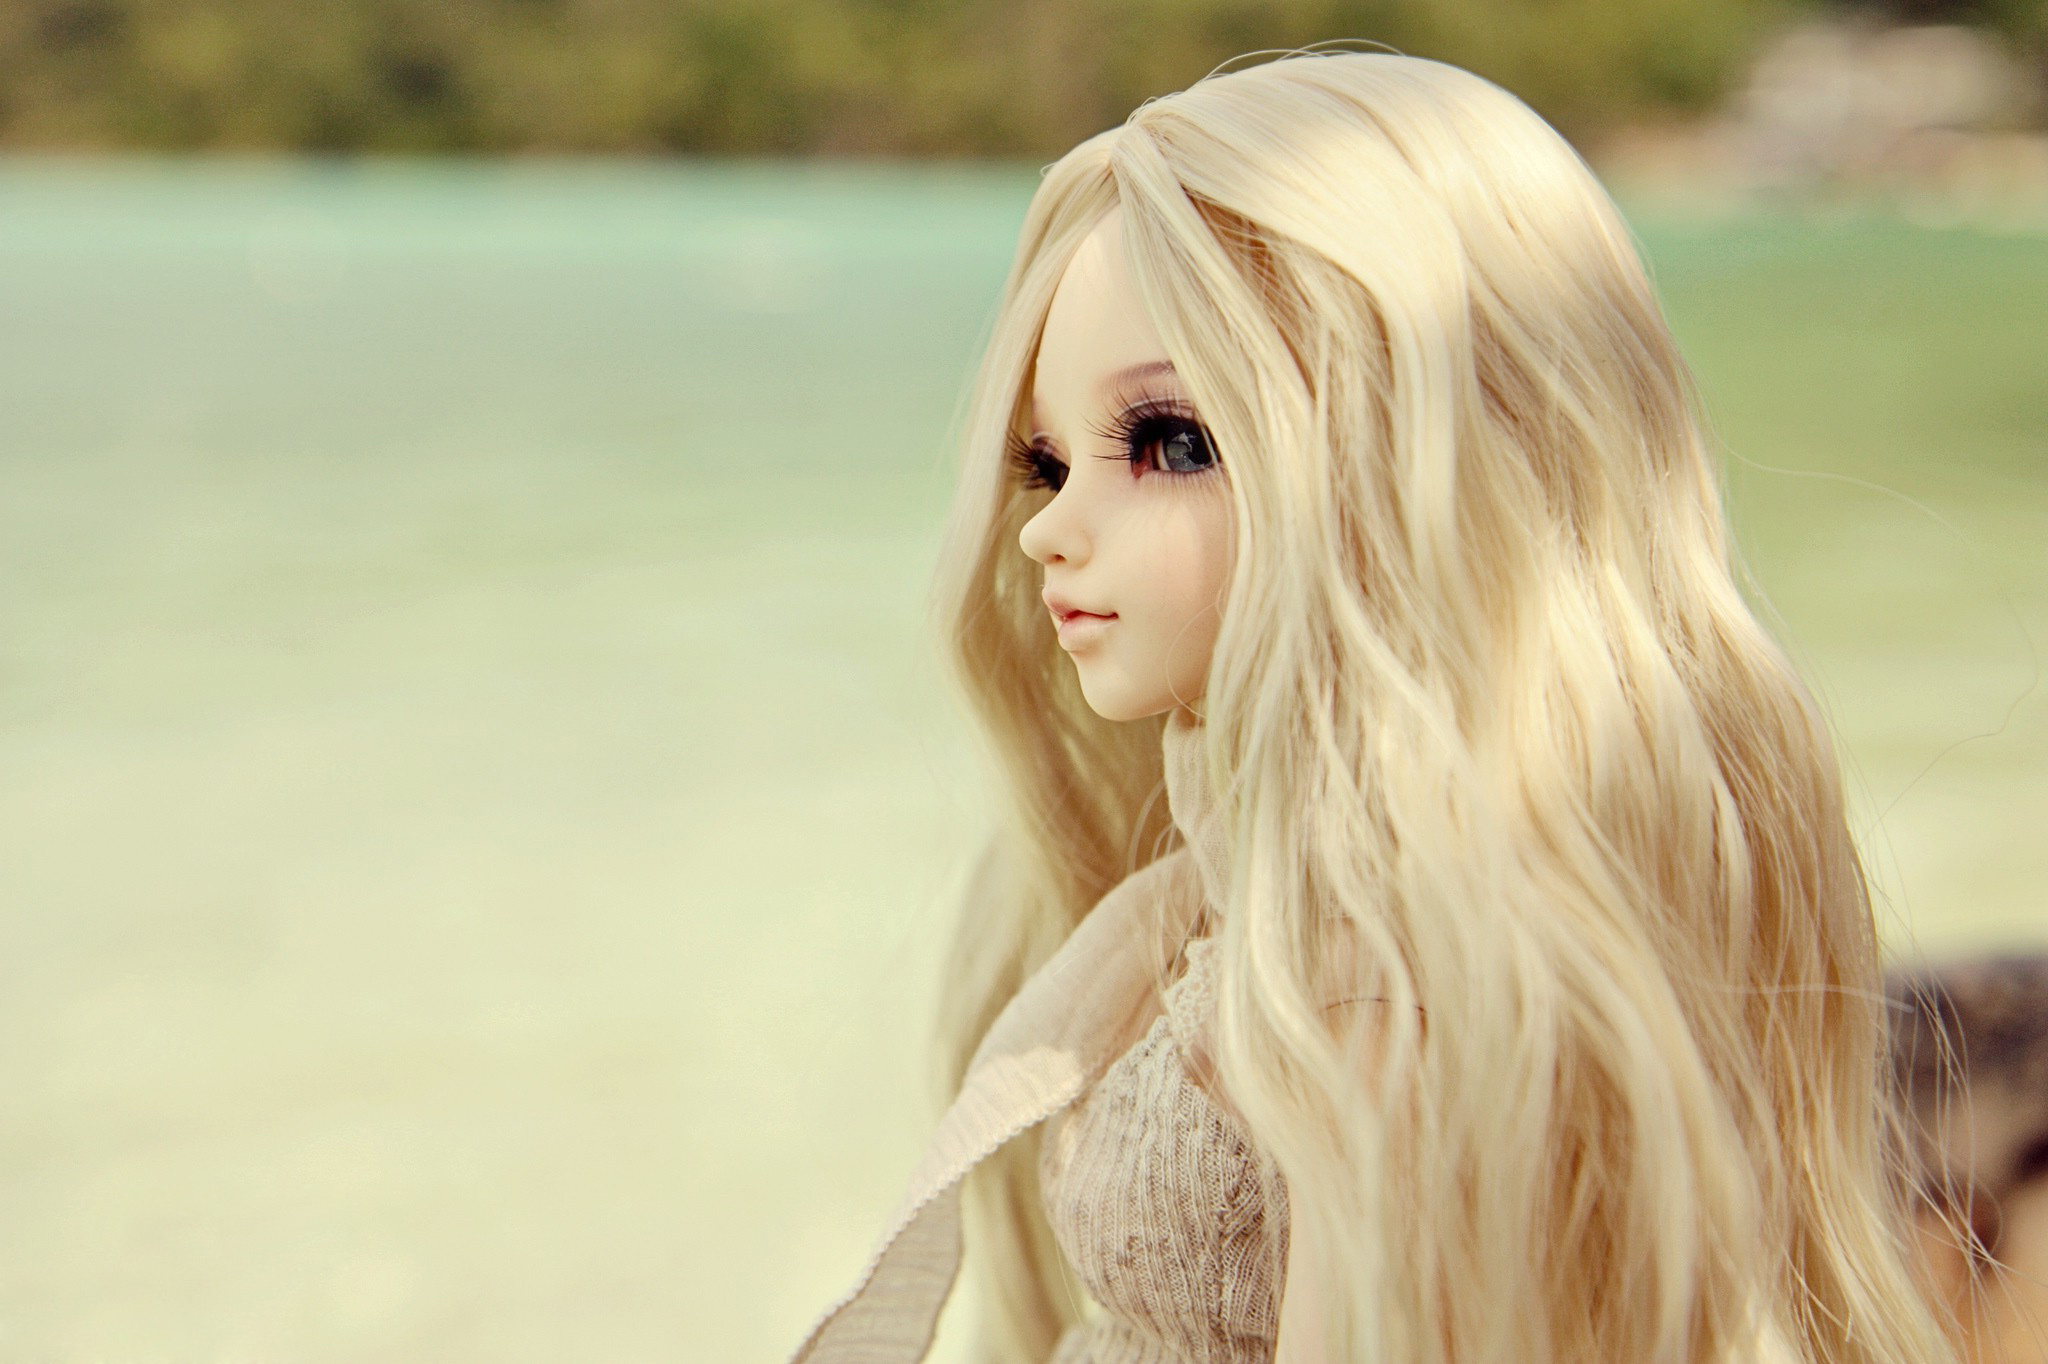 Barbie doll images, Pictures of Barbie, Barbie collections, Barbie fashion, 2050x1370 HD Desktop